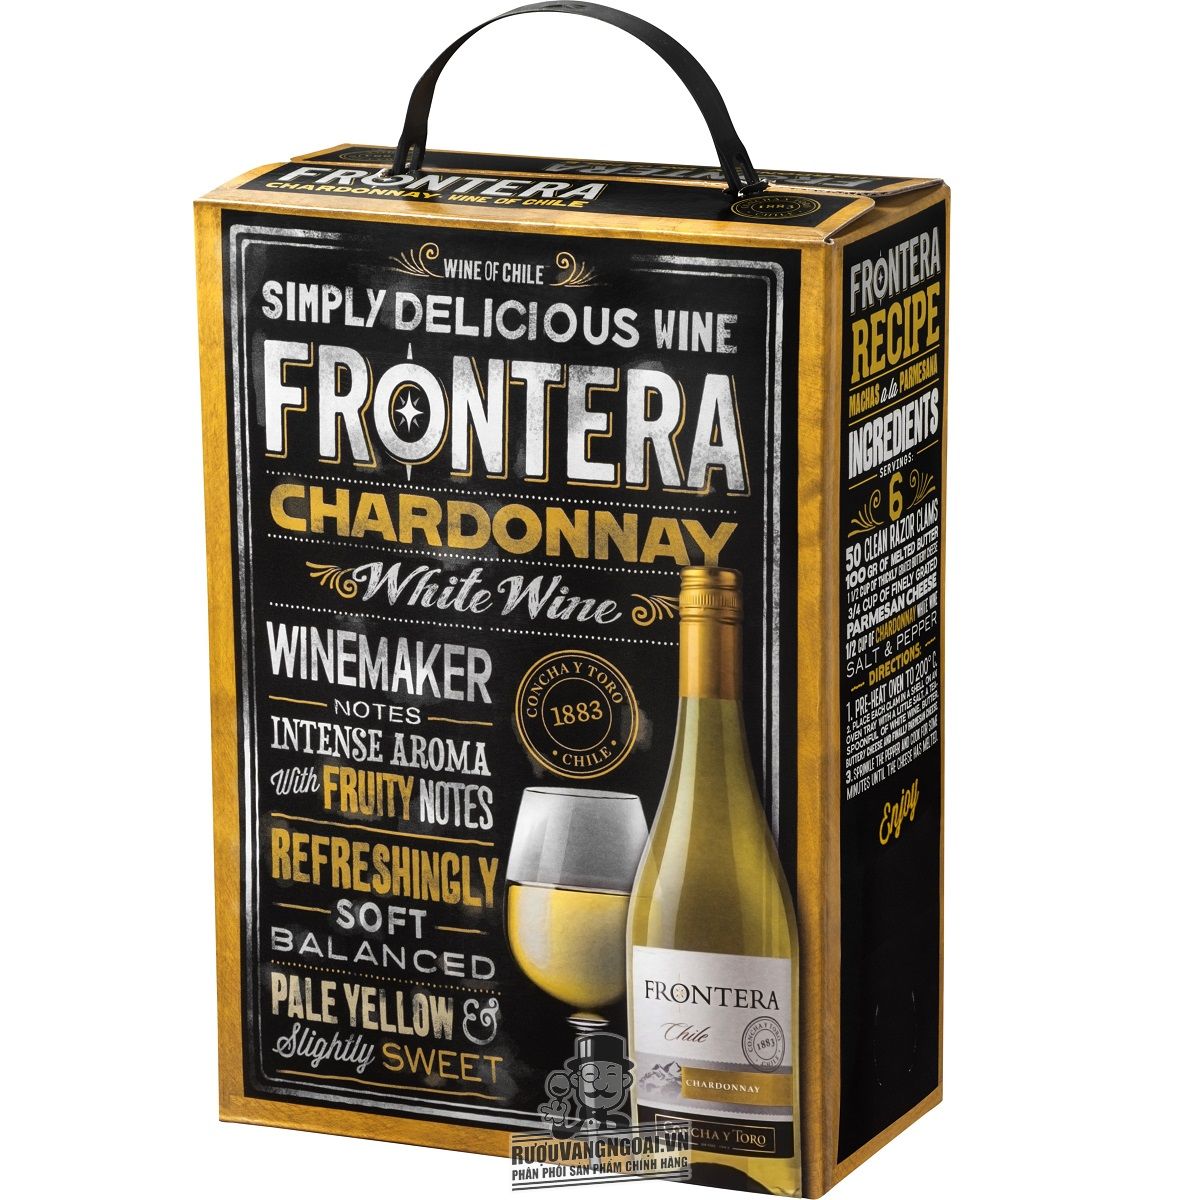 Vang Bịch Chile Bib Frontera 3L Chardonnay